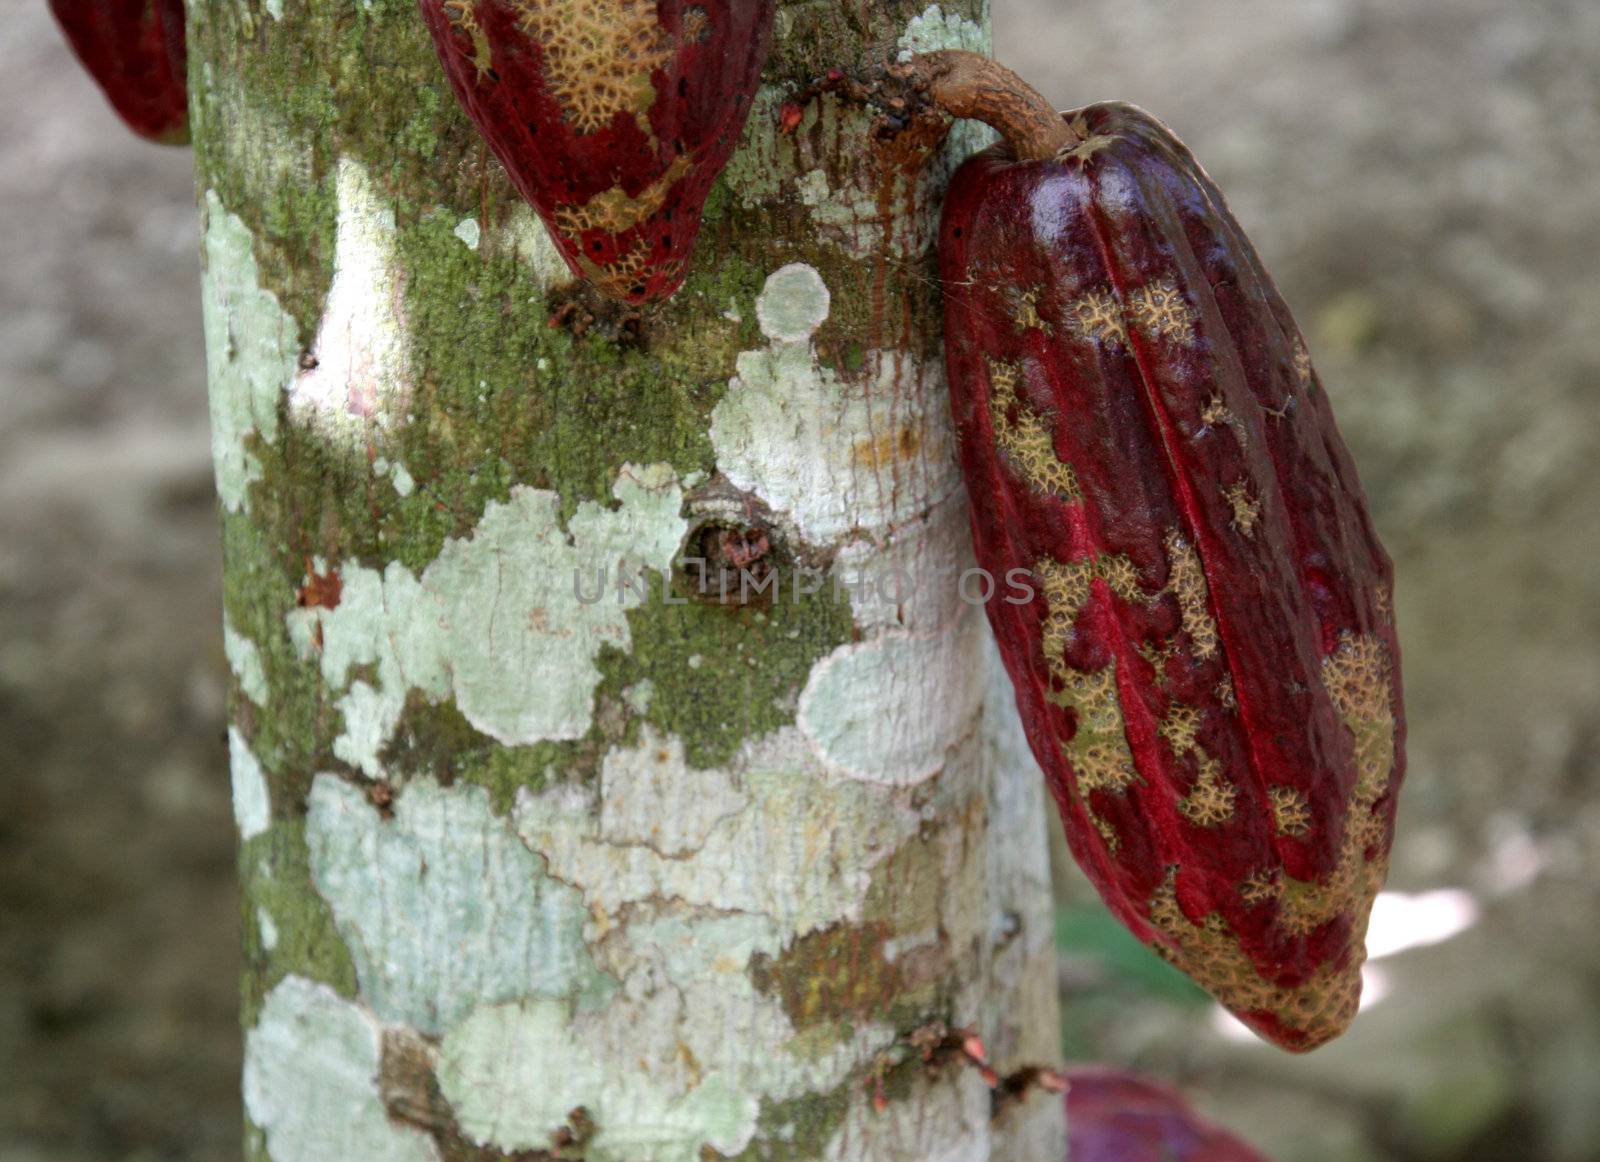 A cocoa pod on a tree.